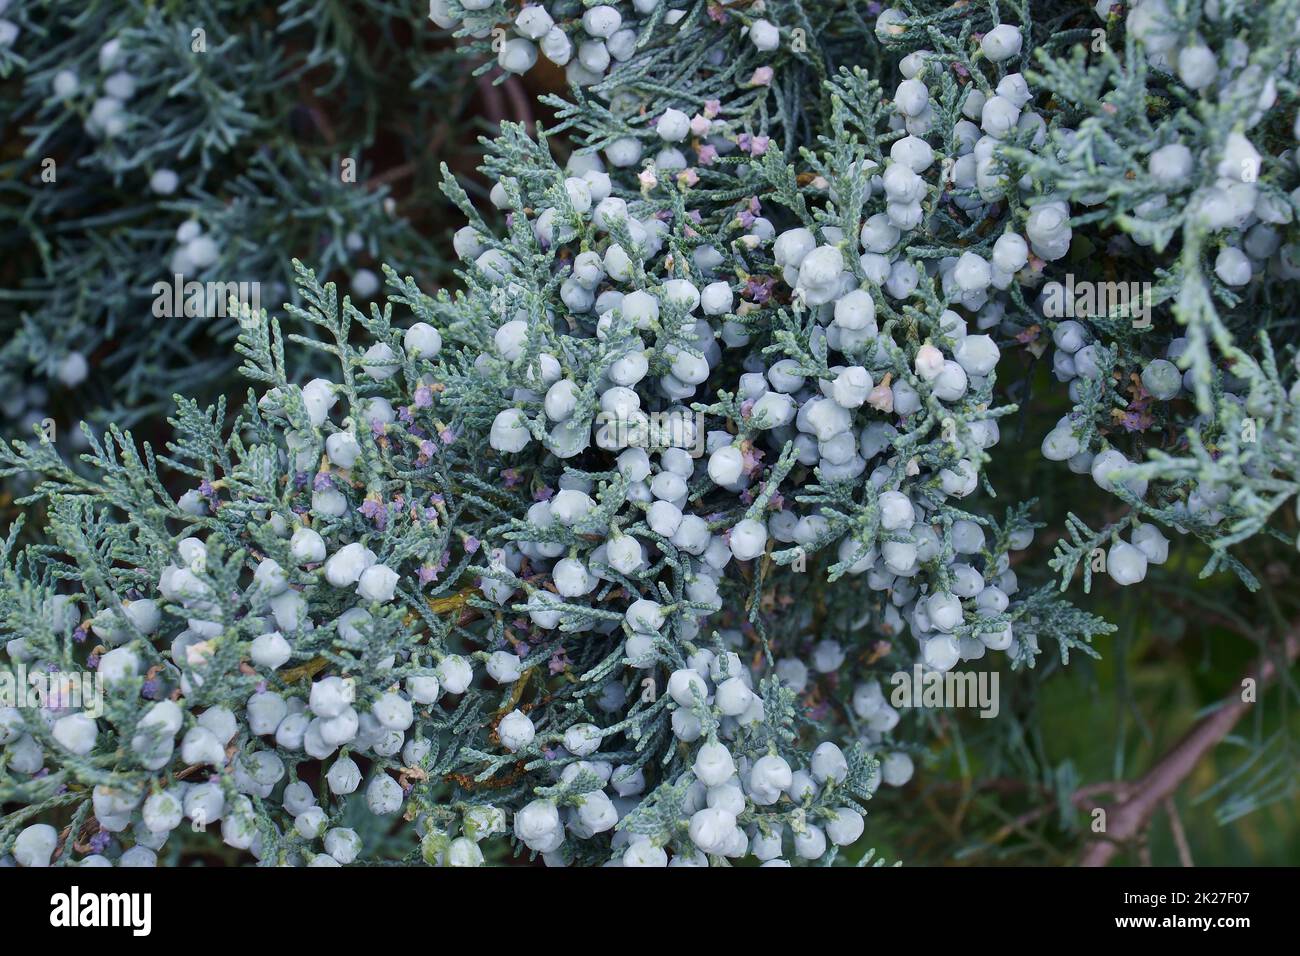 Close-up image of Grey Owl juniper cones Stock Photo